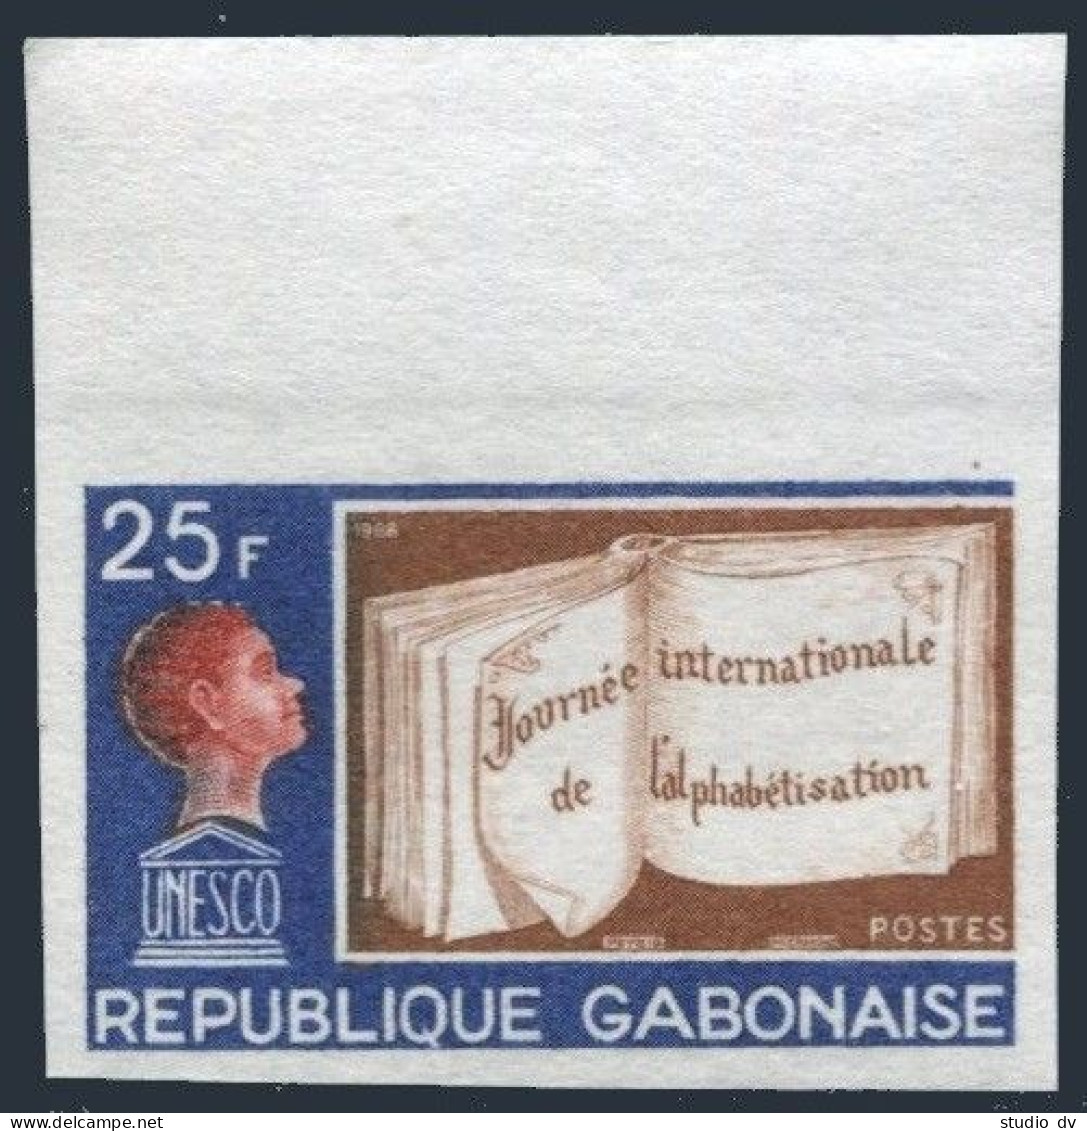 Gabon 231 Imperf,MNH.Michel 312B. Literacy Year ILY-1968.Open Book,child,UNESCO. - Gabun (1960-...)